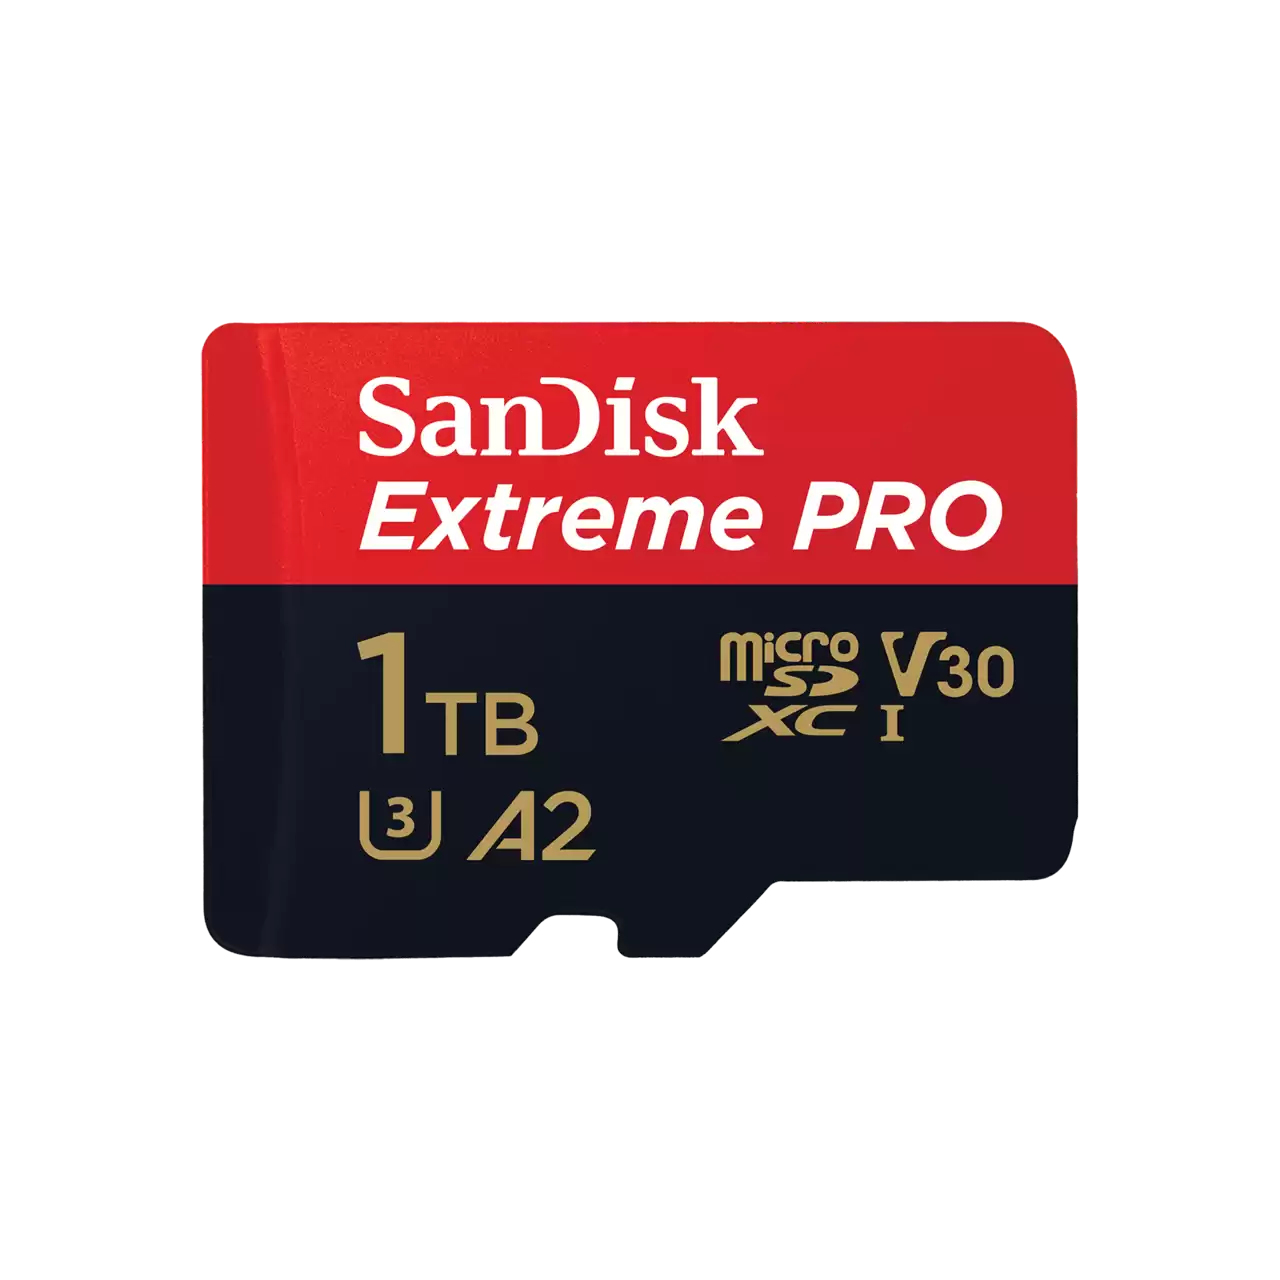 SanDisk Extreme PRO 1000 GB MicroSDXC UHS-I Class 10